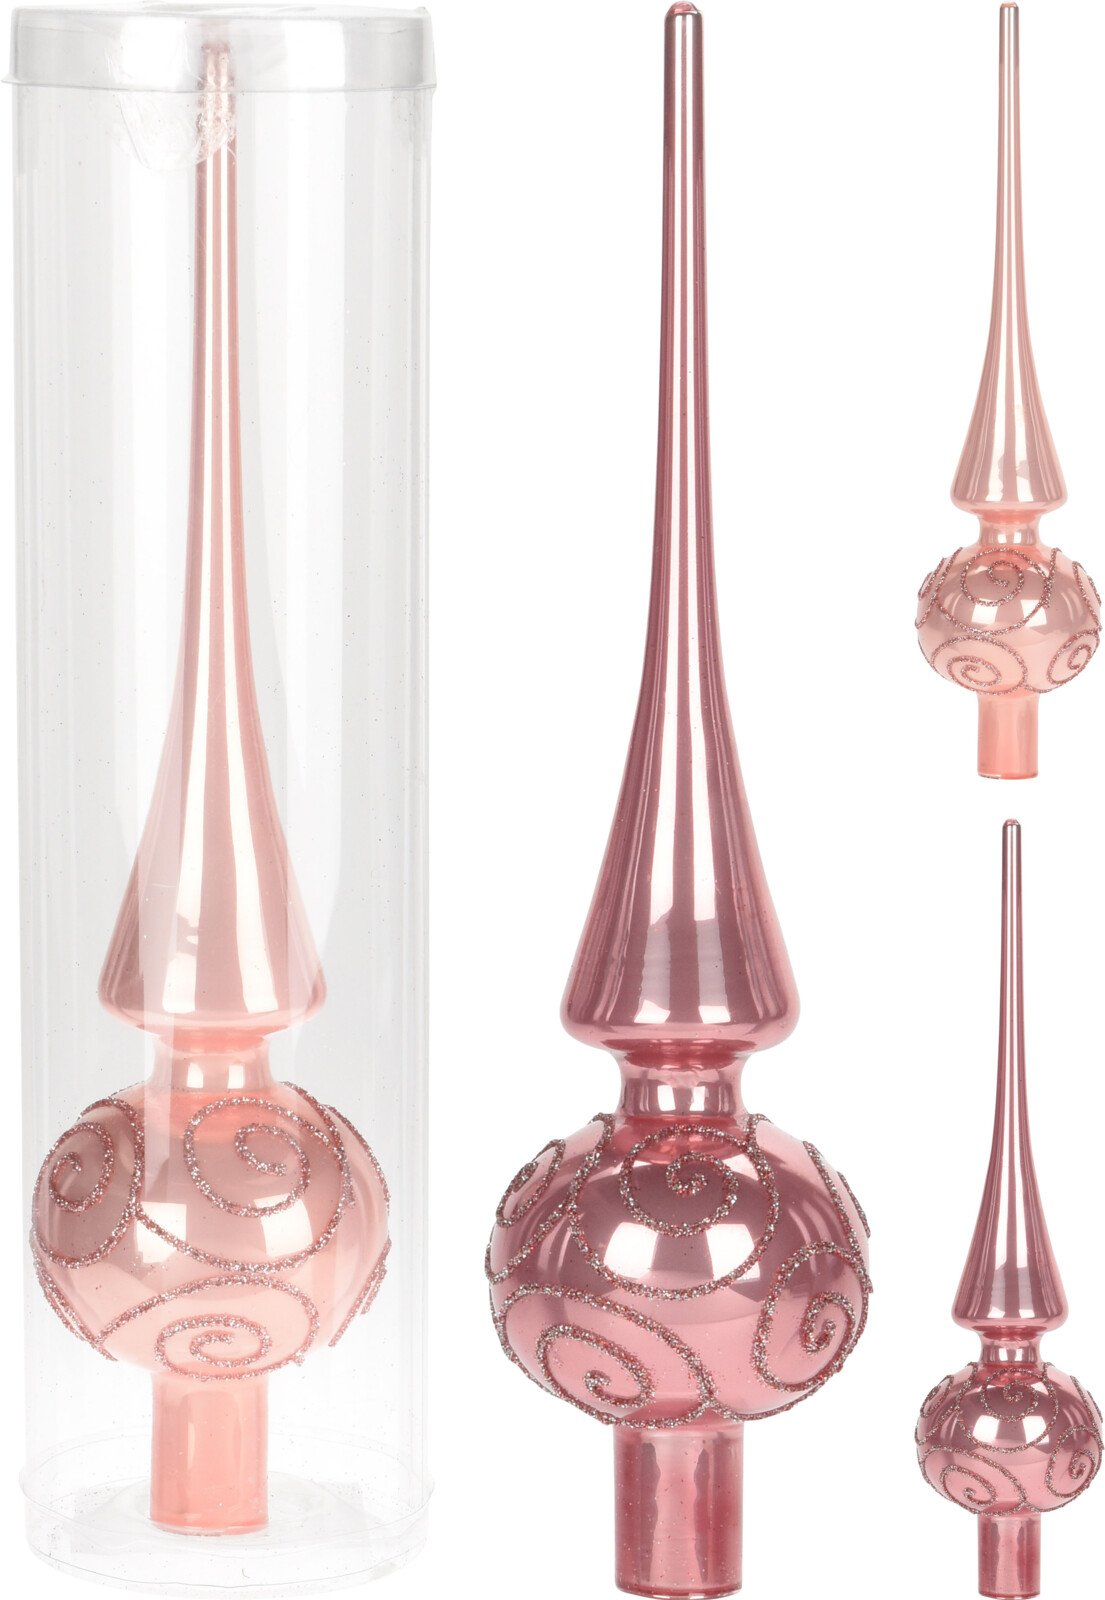 Eglės viršūnė GLASS, rožinės sp., 2 rūšys, 25 cm